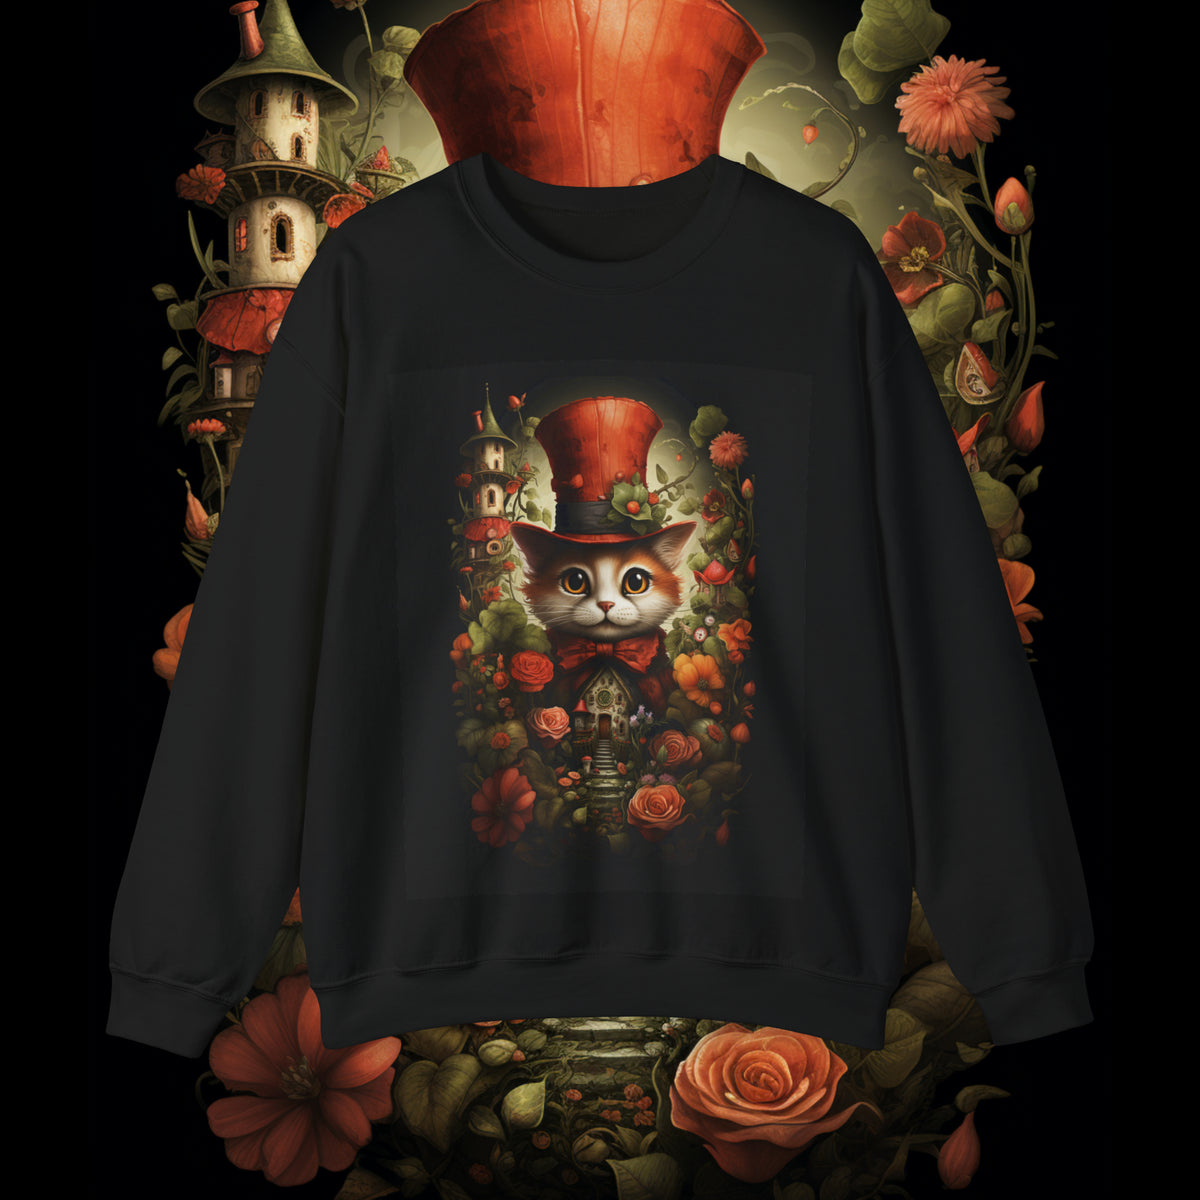 A Dreamy Cat House Fantasy Sweatshirt with Floral Garden - Unique and Cozy